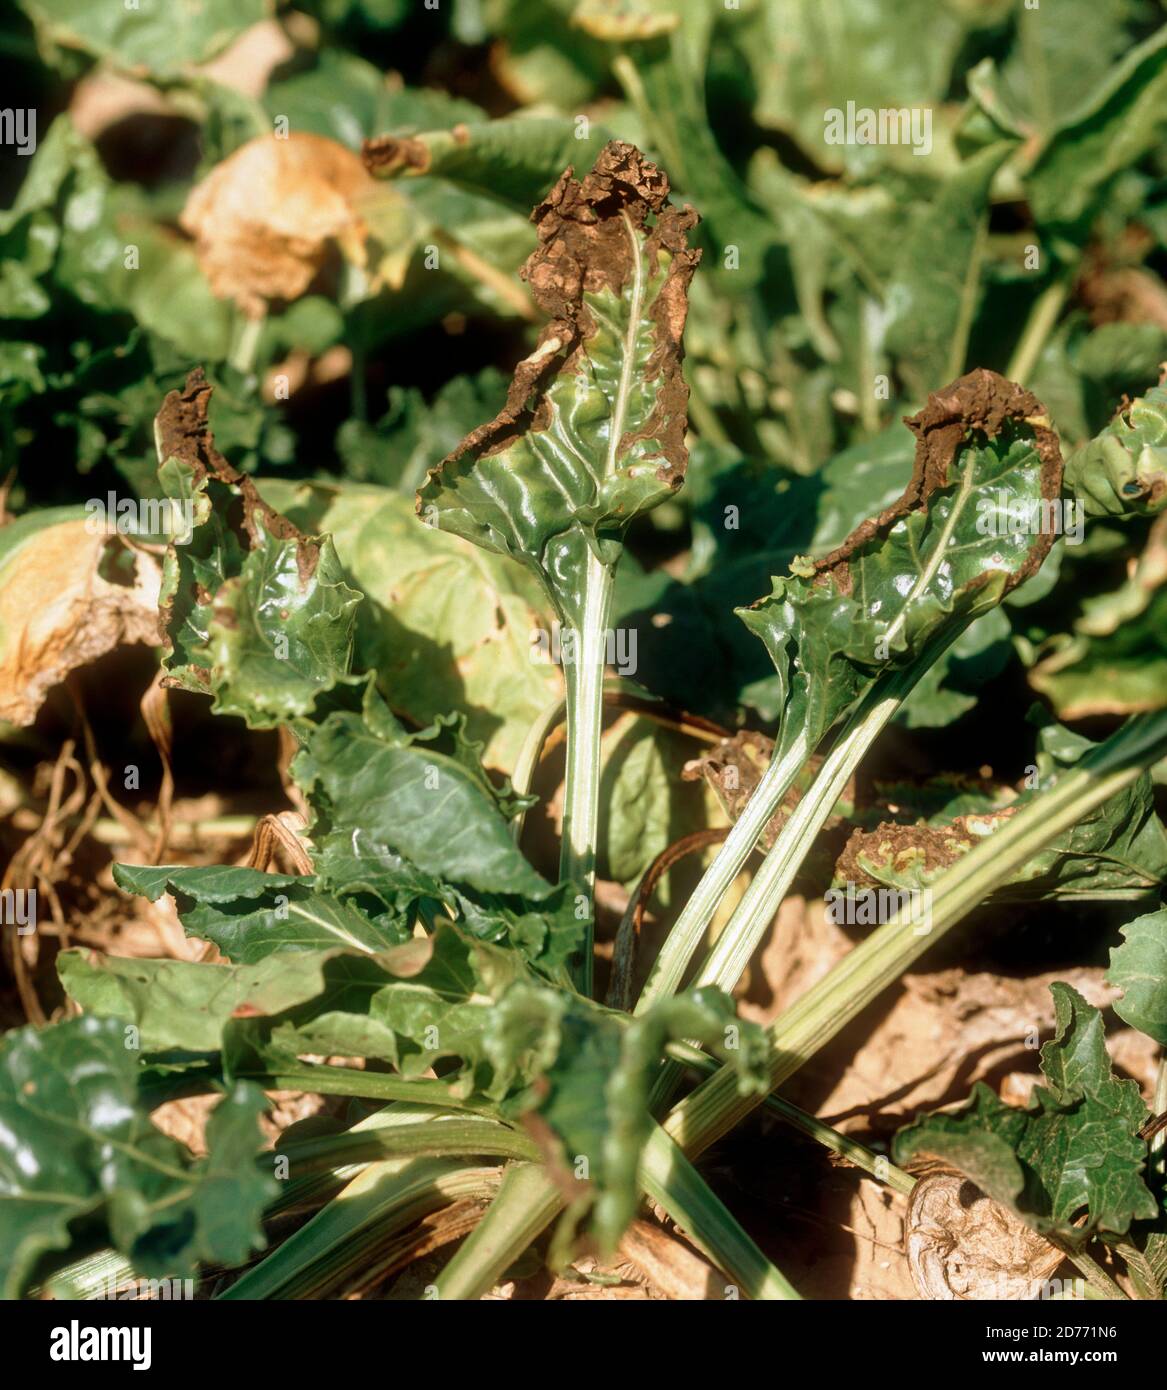 Alternaria leaf spot (Alternaria tenuis) necrosis and leaf curling on sugar beet leaves, France, September Stock Photo